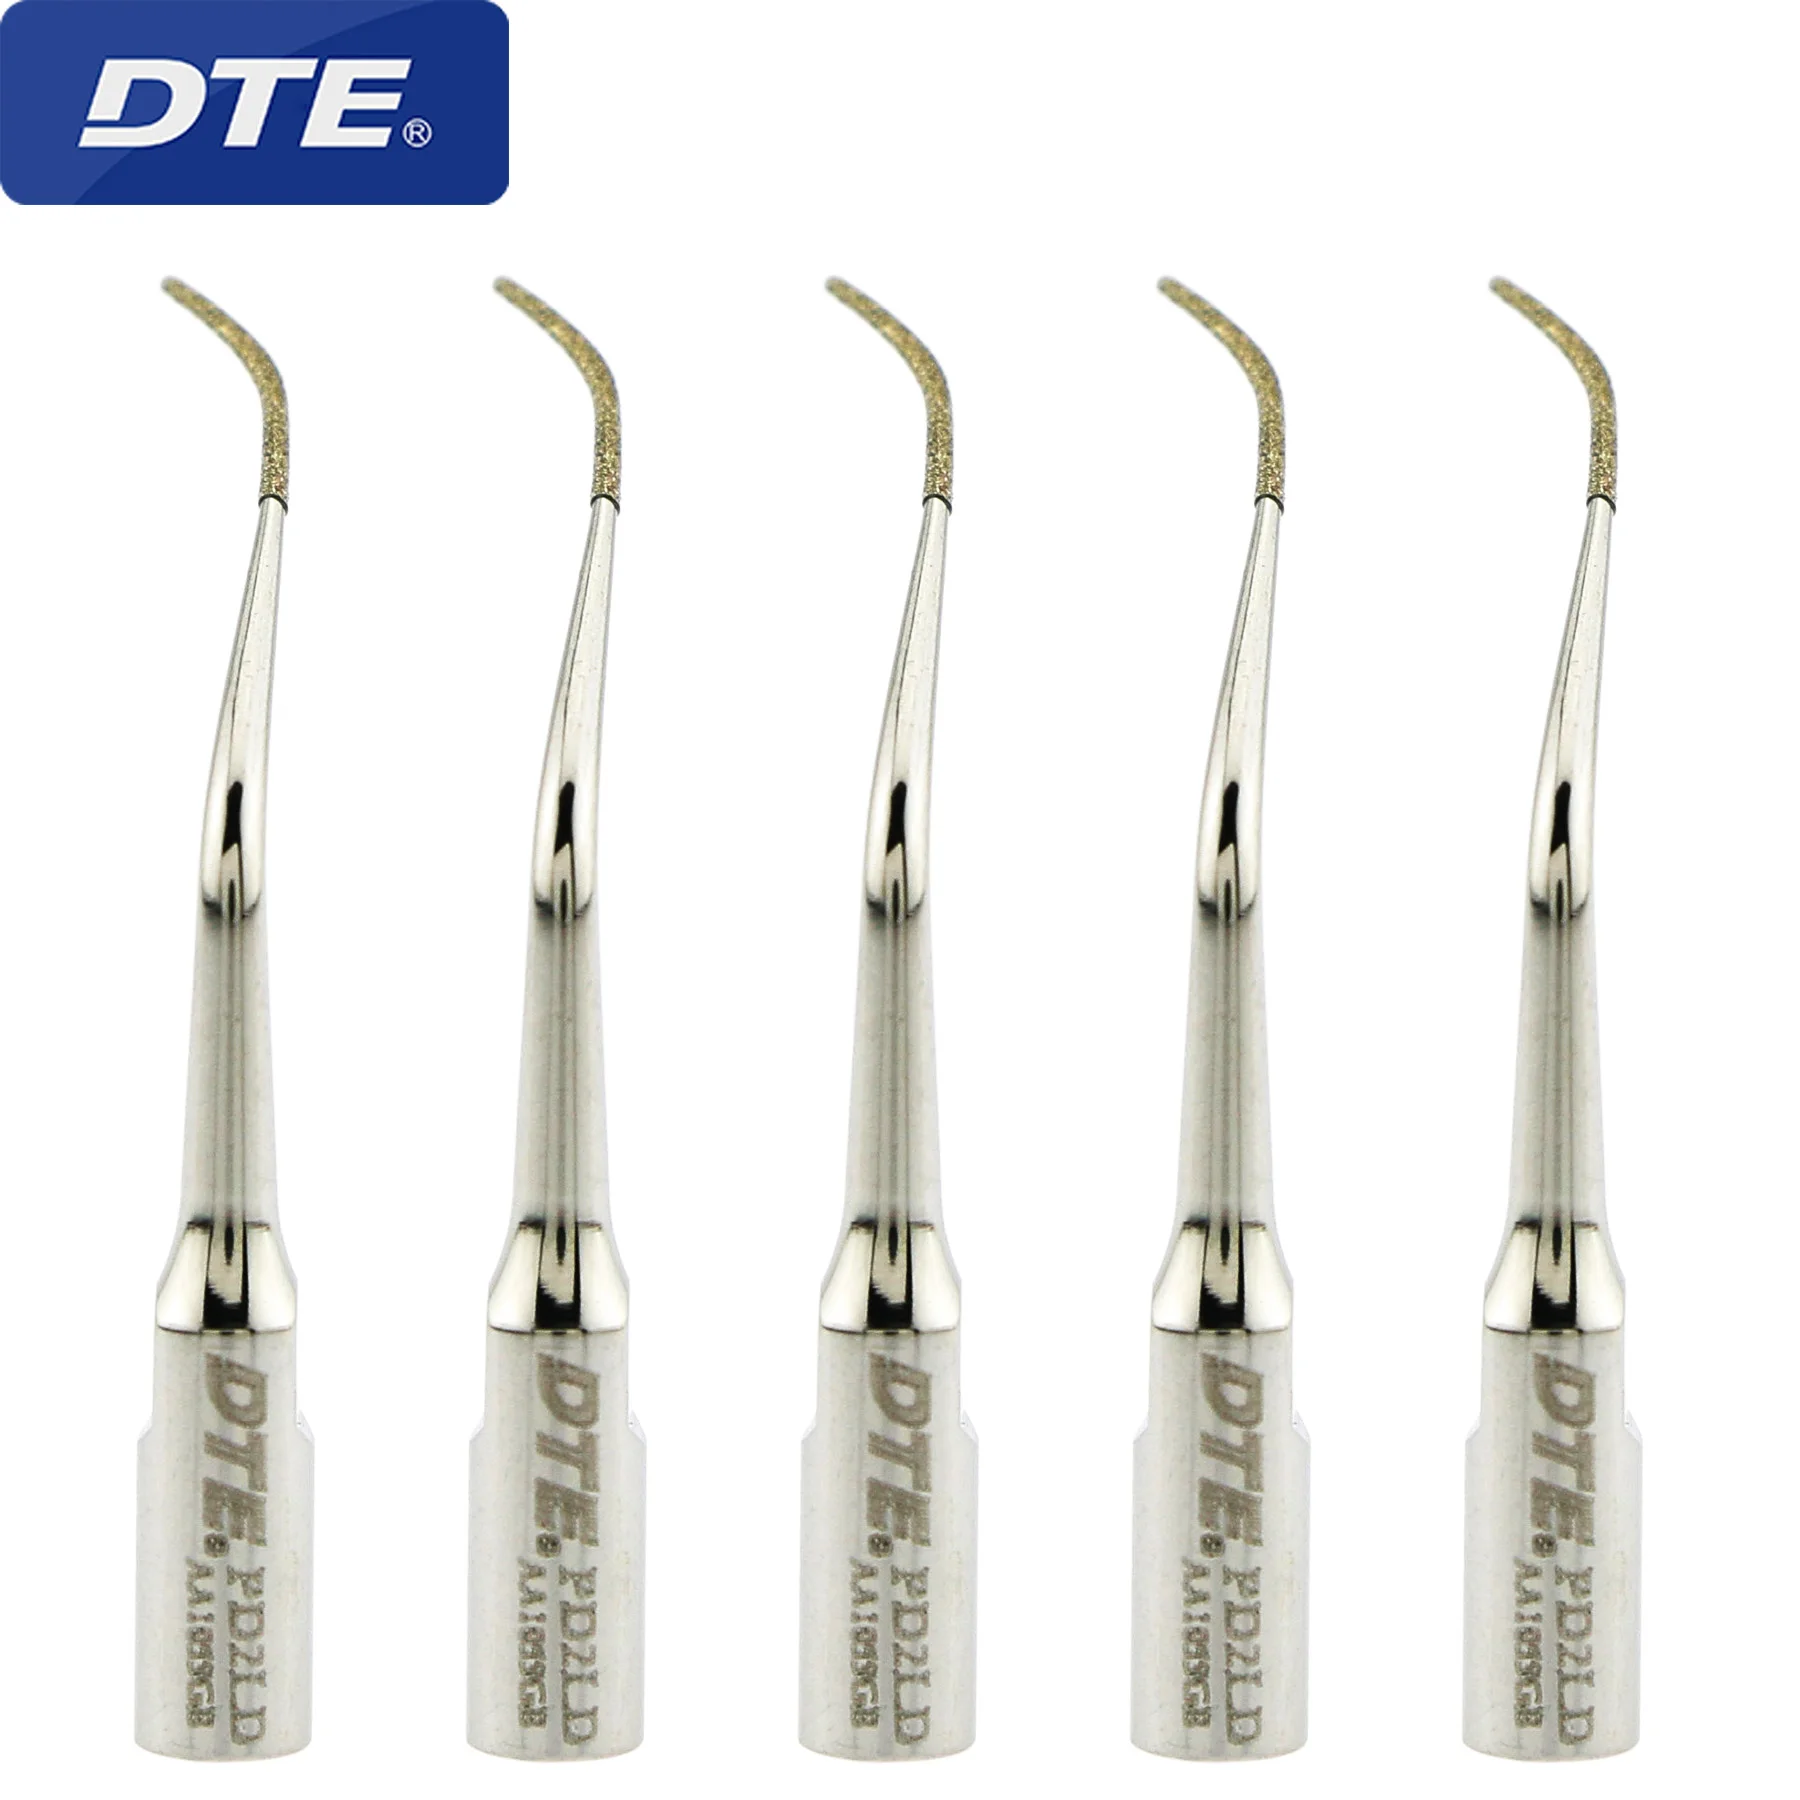 5 Pcs DTE Dental Ultrasonic Scaler Periodontal Scaling Tips PD2LD Compatible Satelec NSK